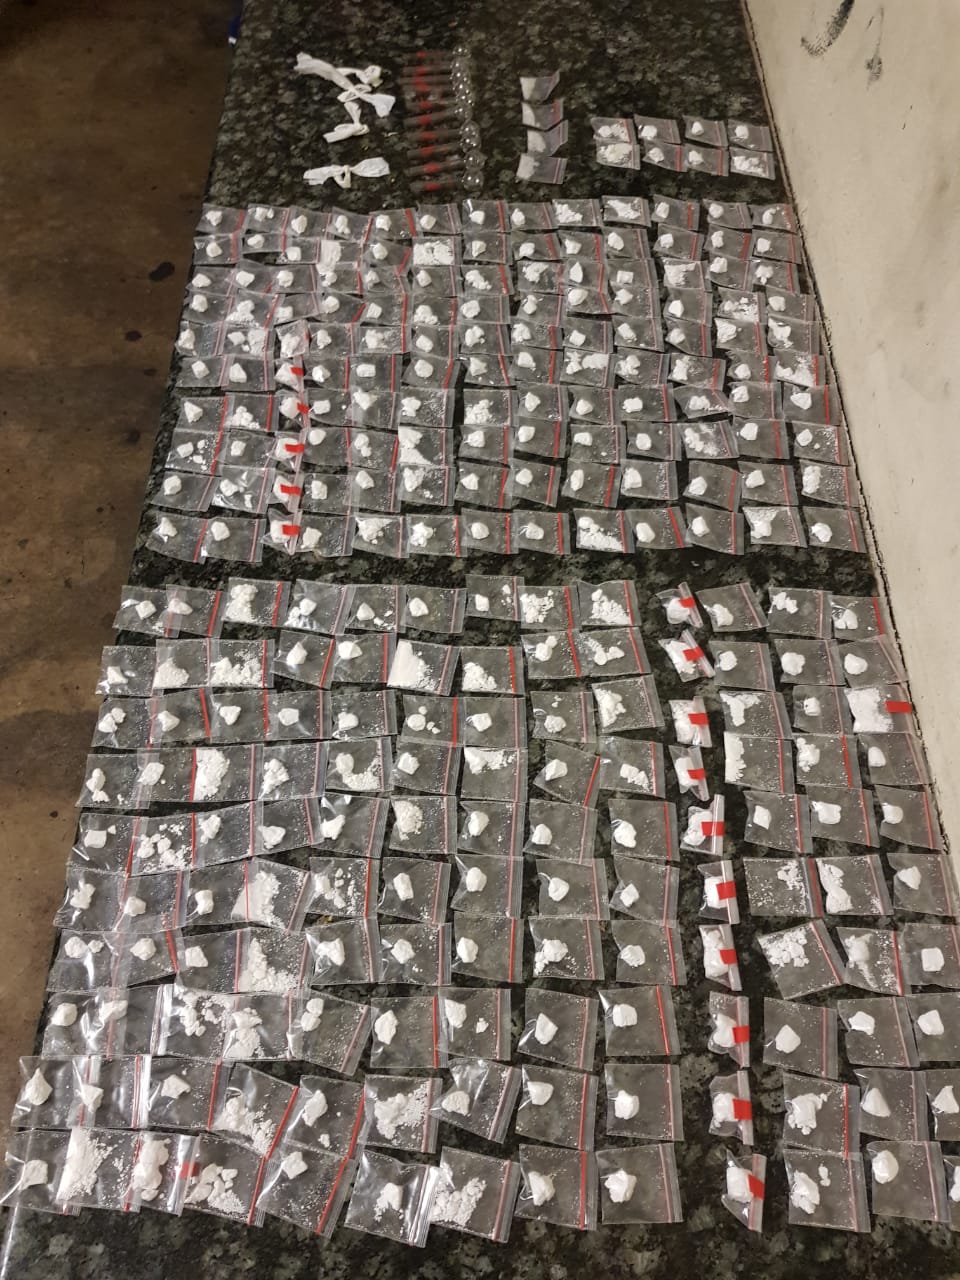 R104 000 worth of drugs seized